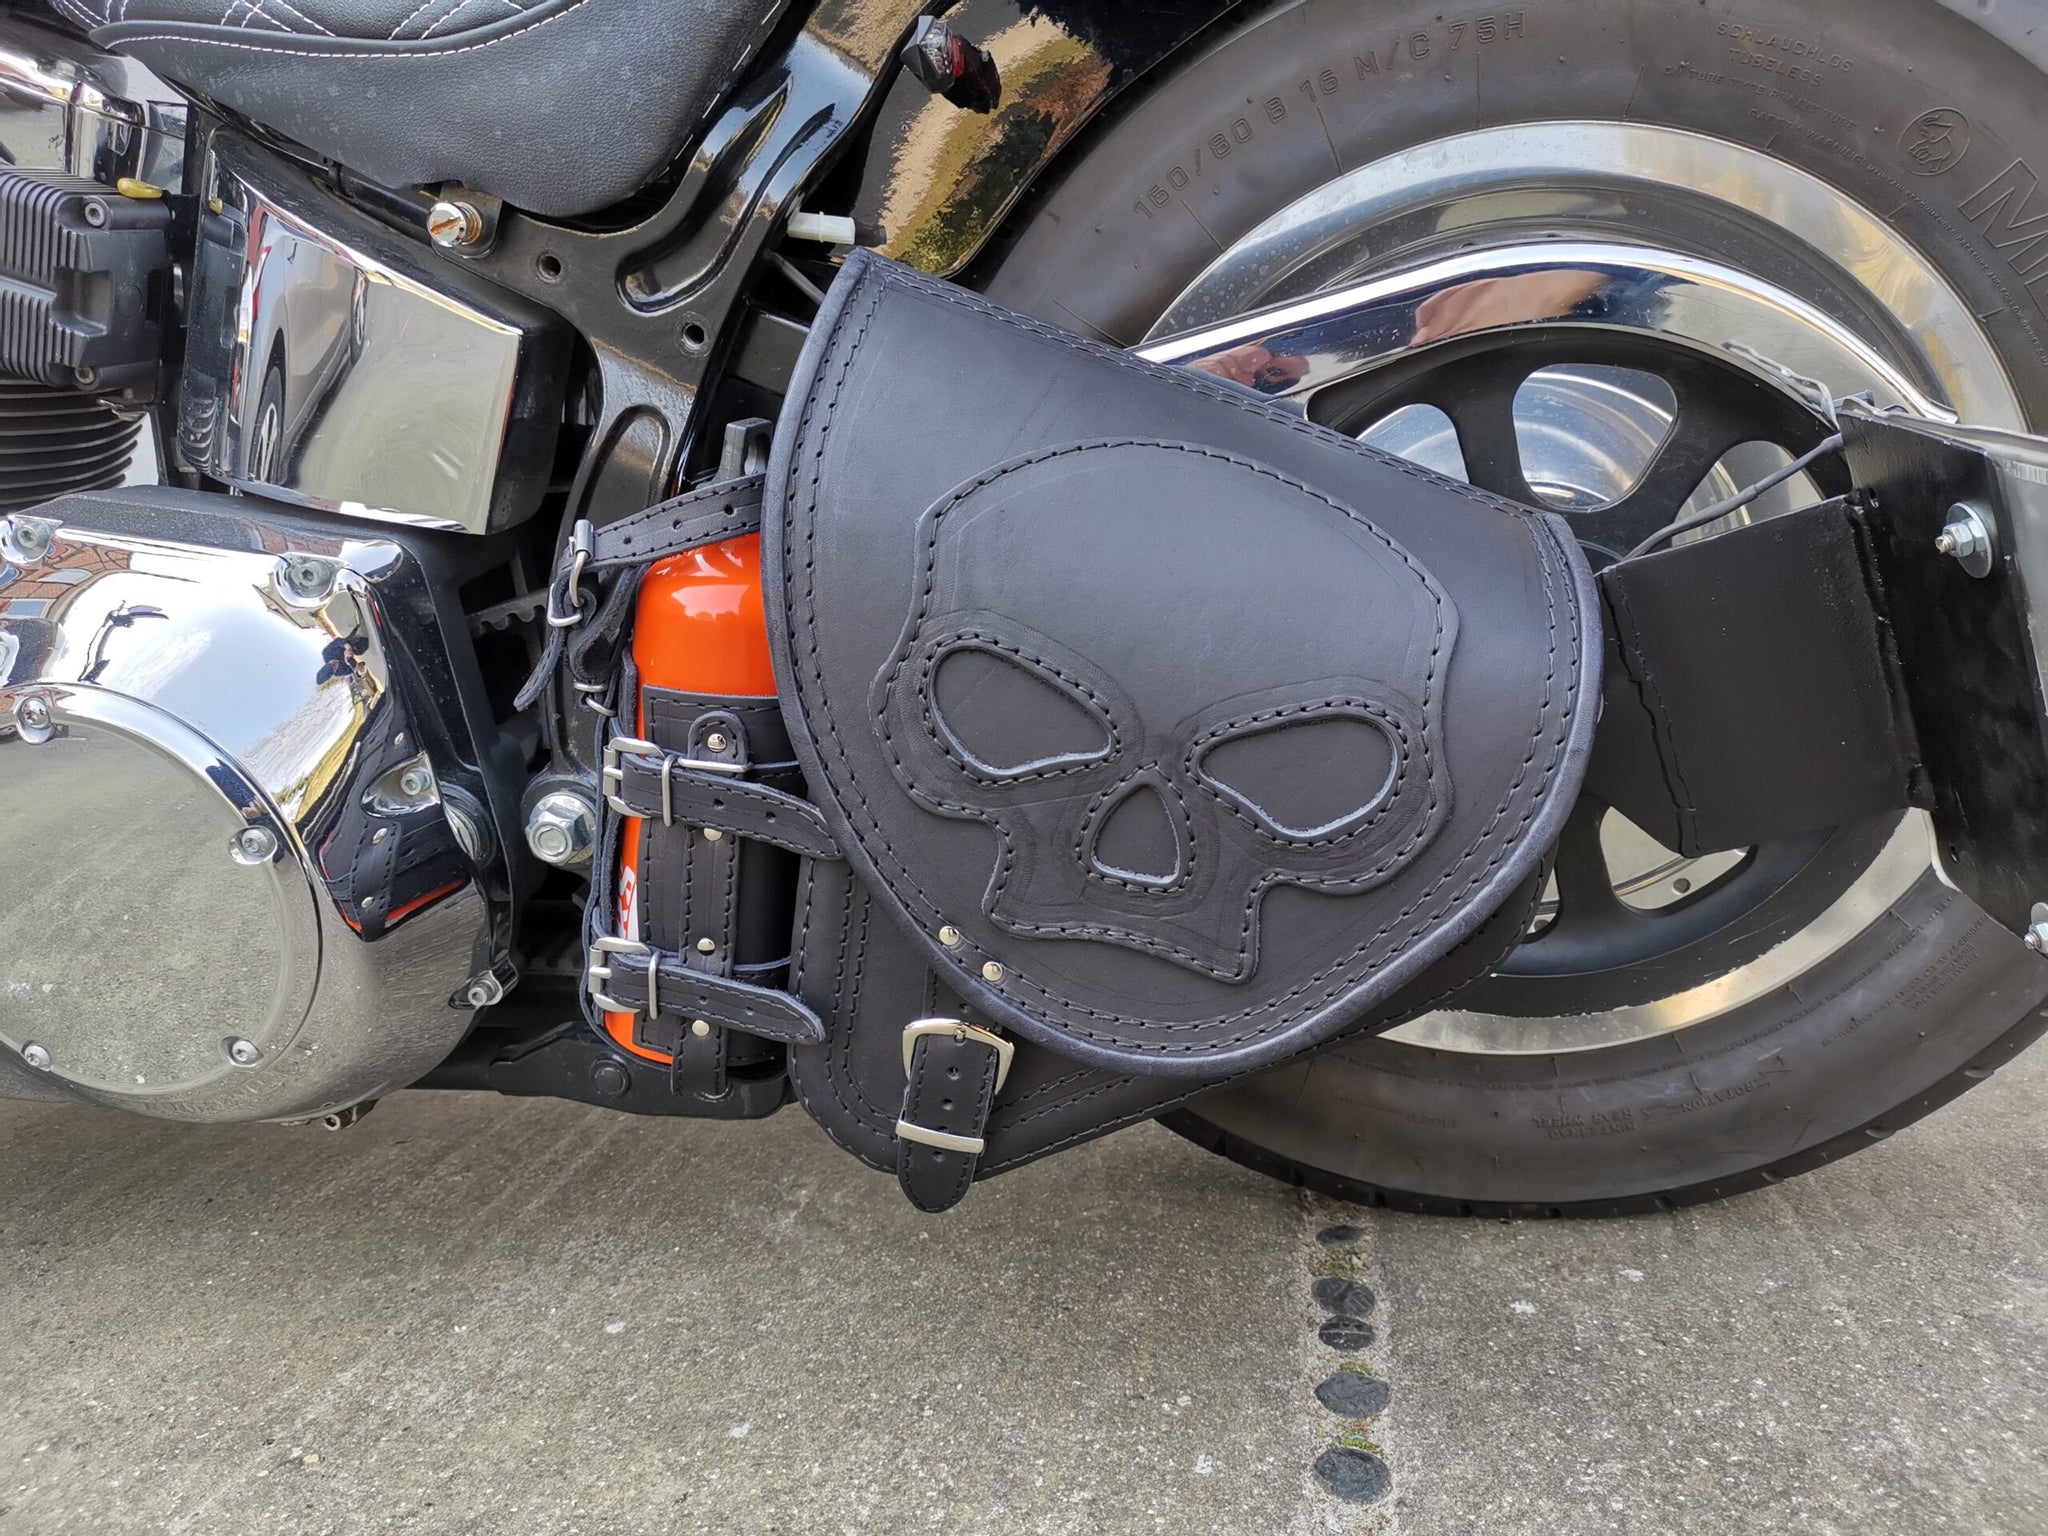 Diablo Skull Black Swing Bag With Bottle Holder Fits Harley-Davidson Softail